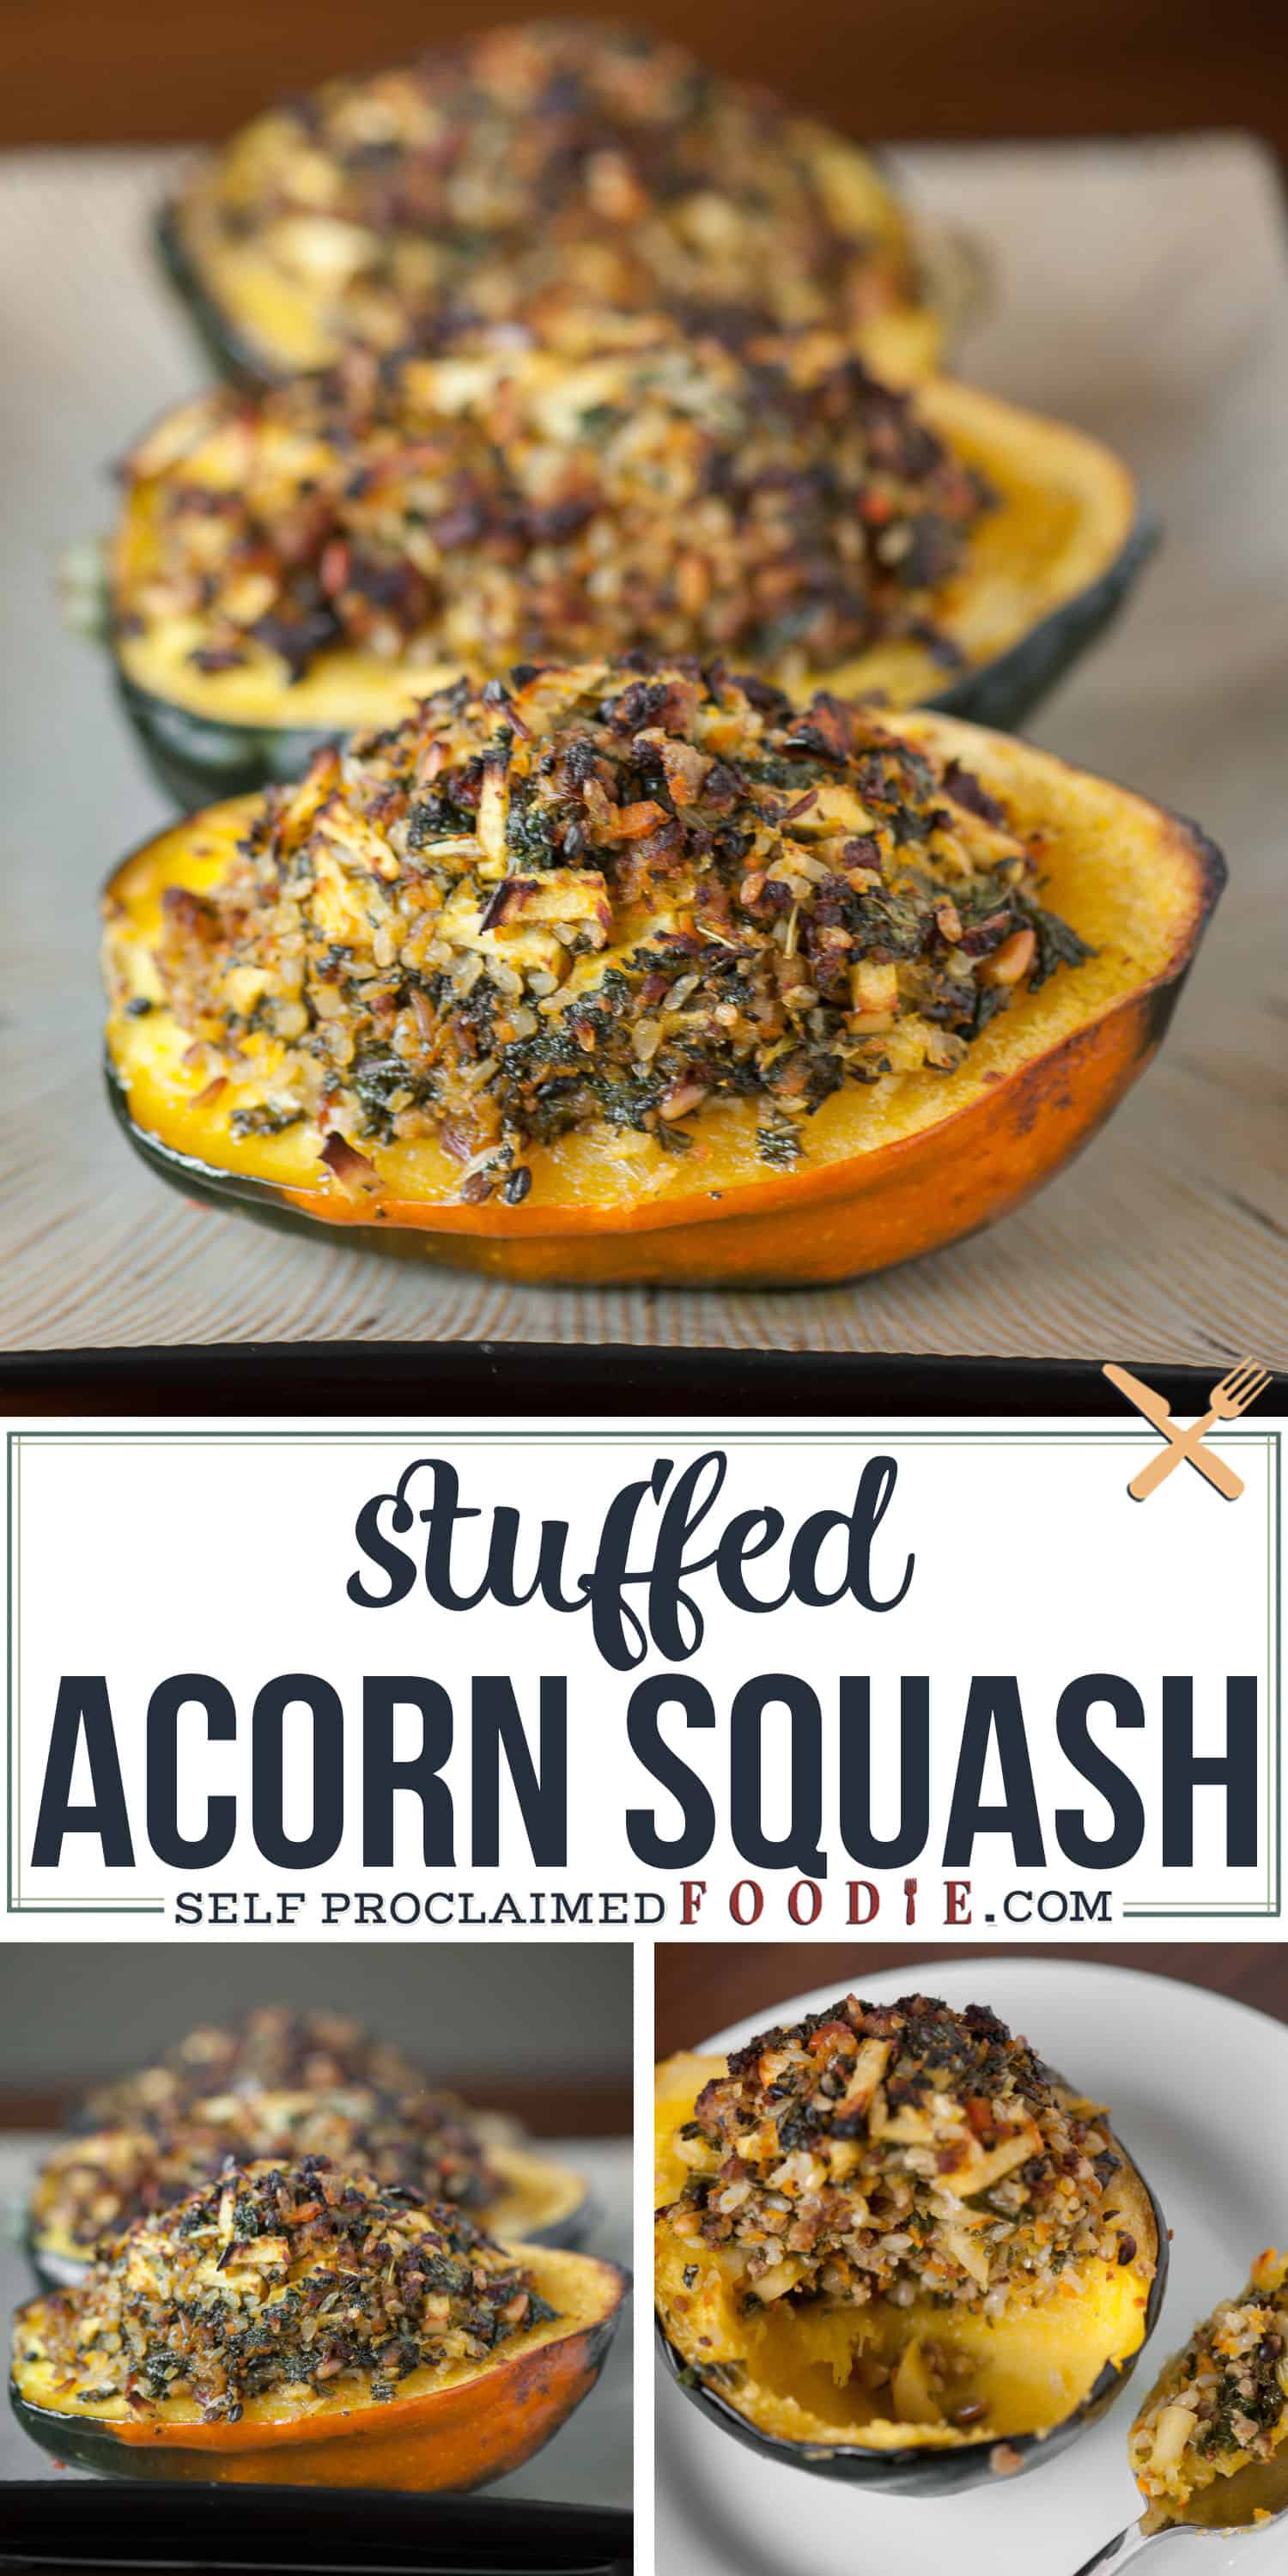 Sausage Stuffed Acorn Squash Recipe - Self Proclaimed Foodie